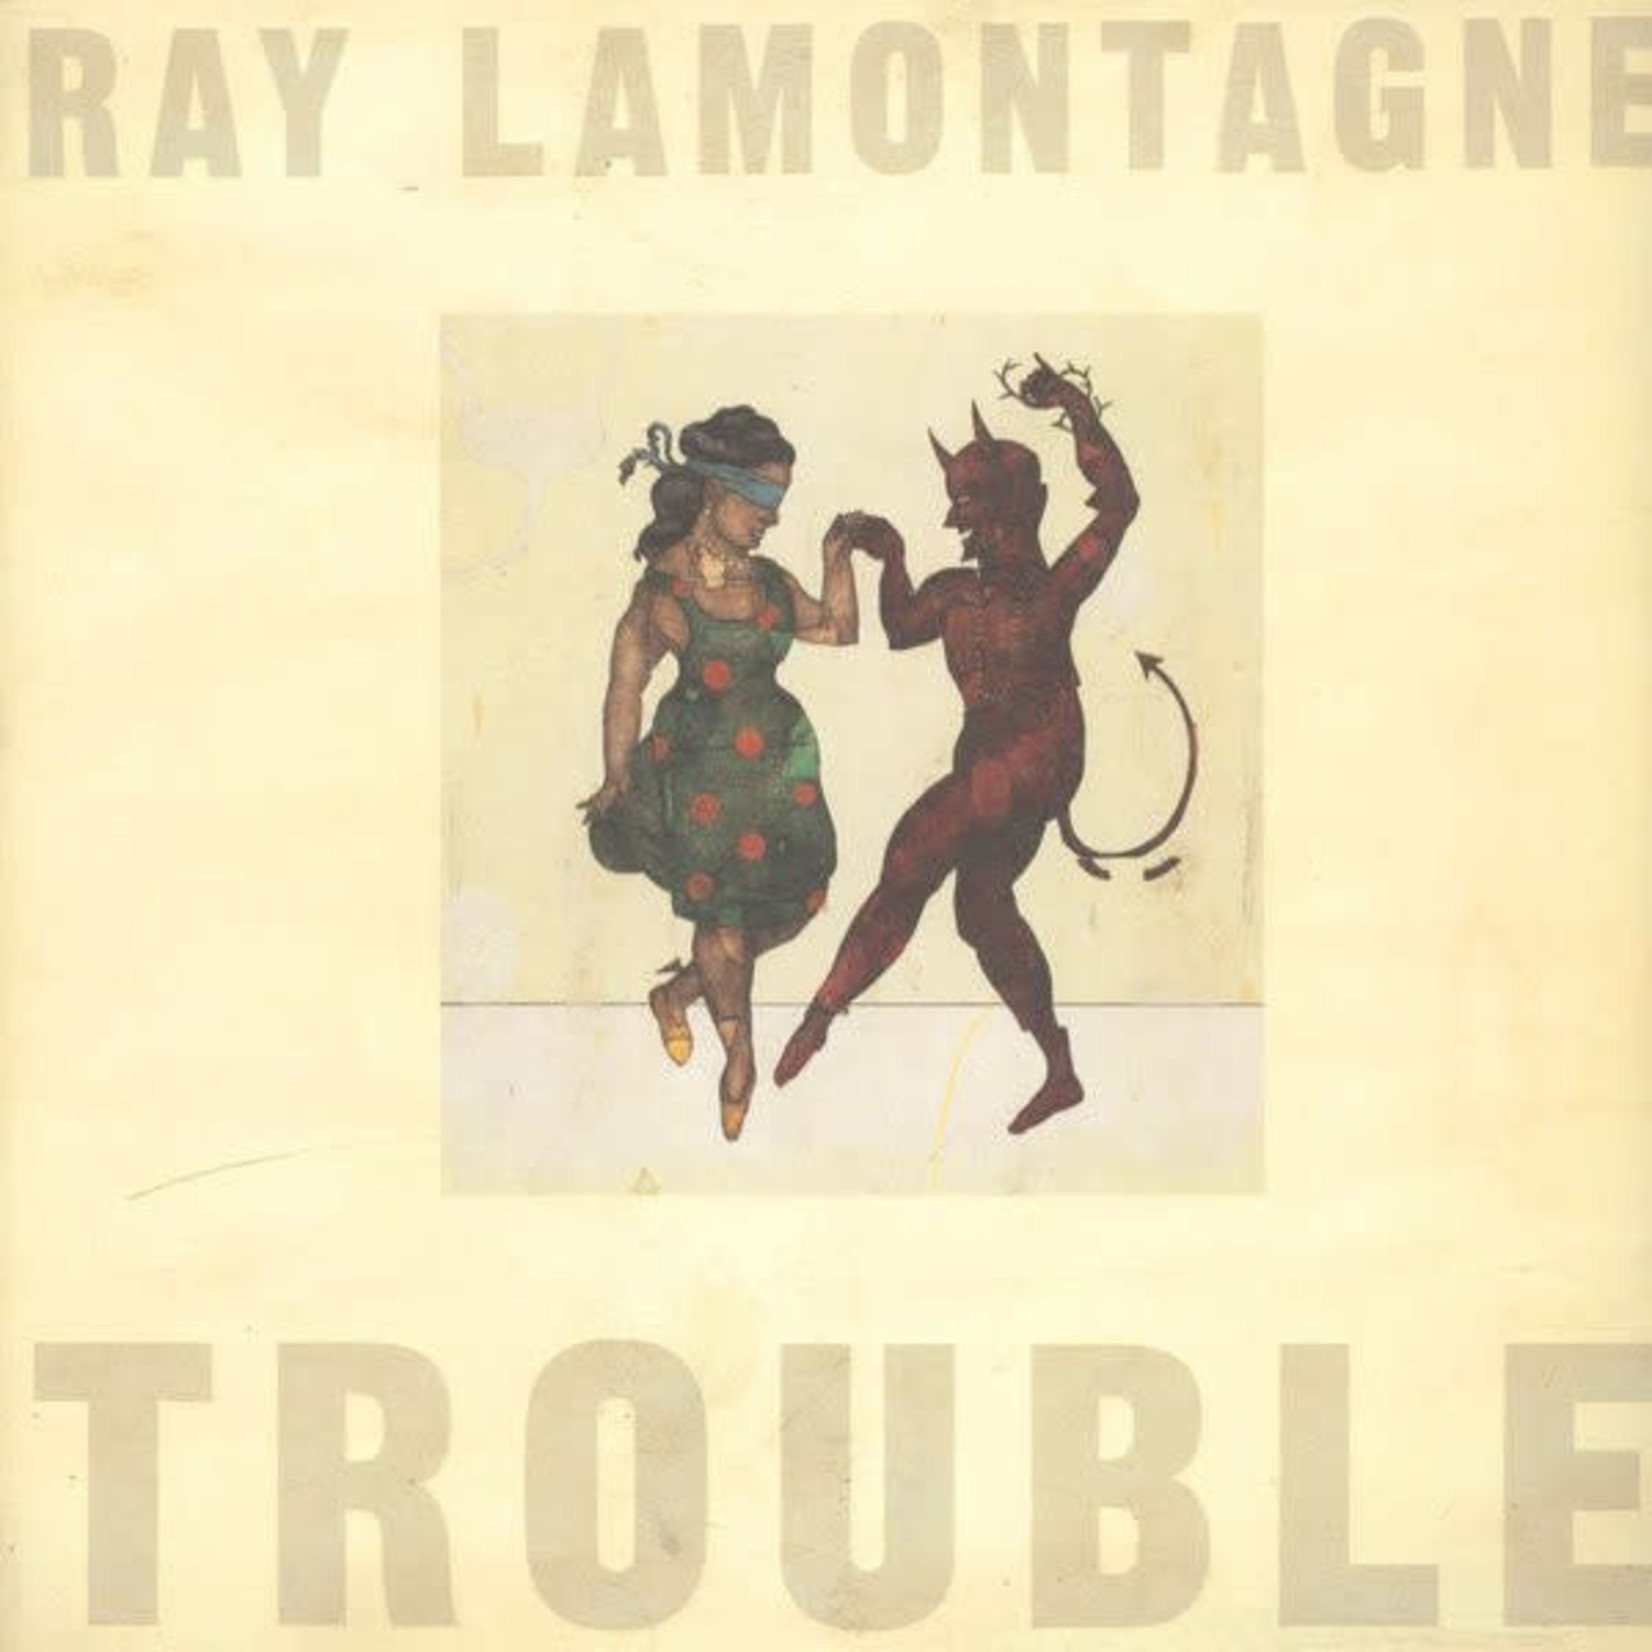 [New] Ray Lamontagne - Trouble